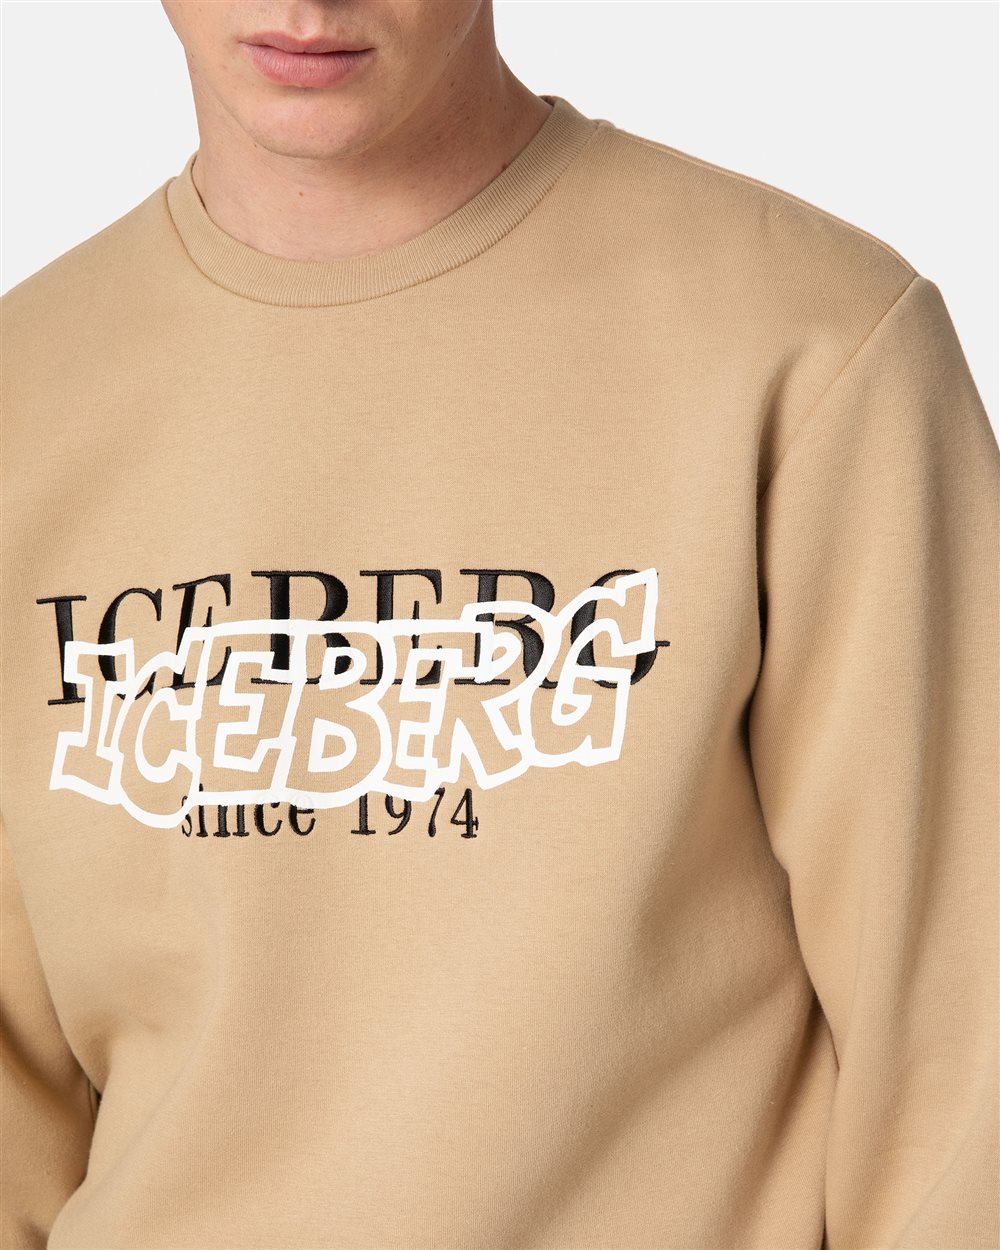 Sweatshirt with institutional logo - Iceberg - Official Website